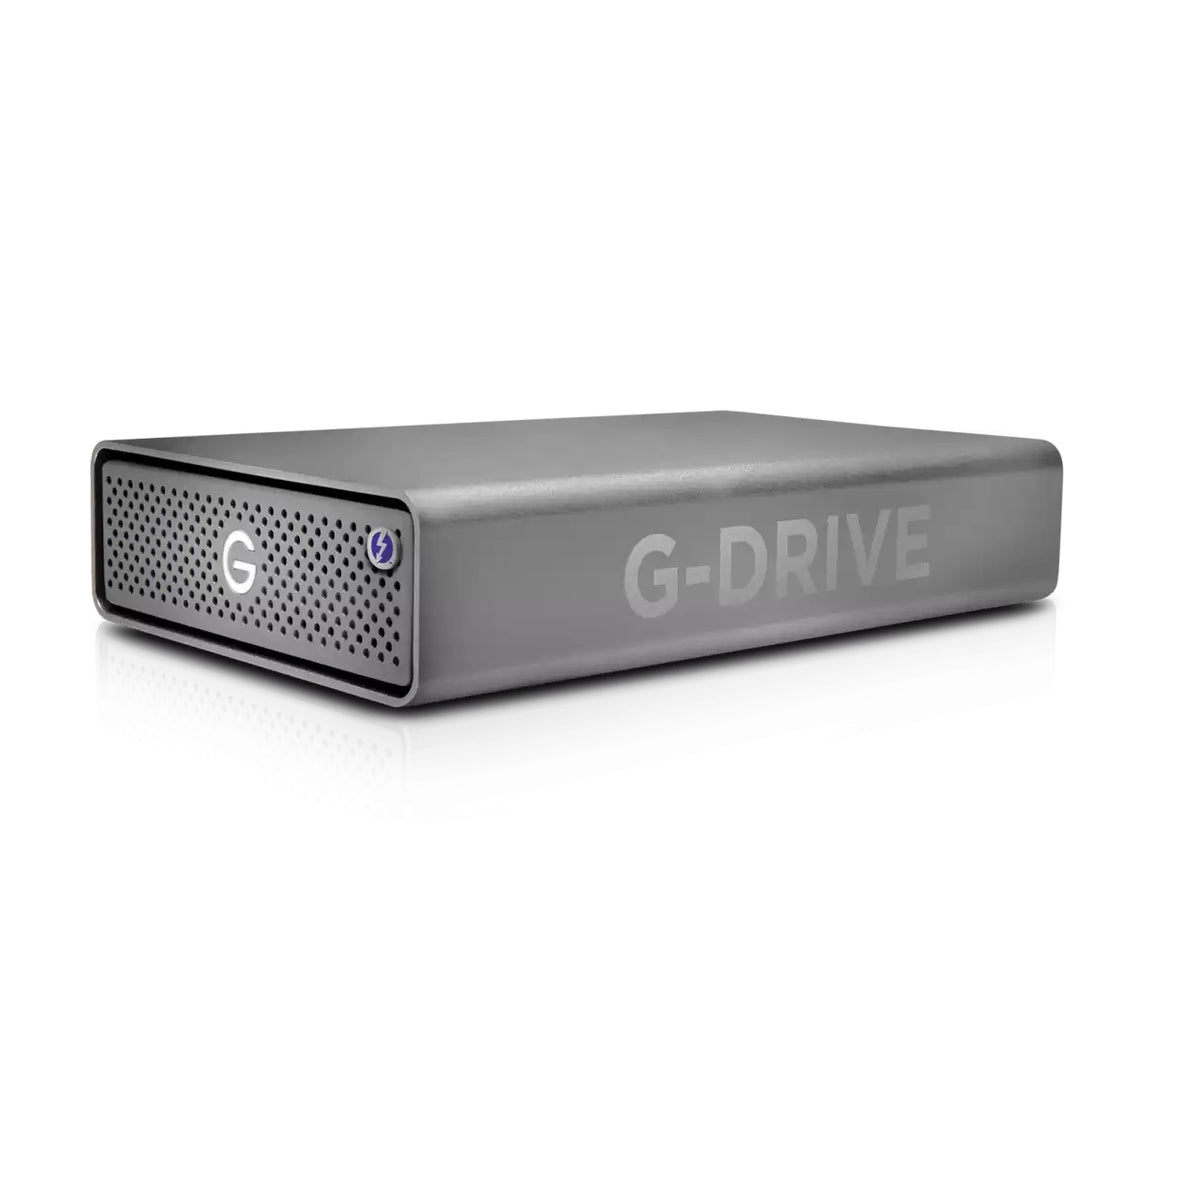 SanDisk Professional G-DRIVE PRO STUDIO - SSD - 7.68 TB - external (desktop) - Thunderbolt 3 (USB C connector) - space gray